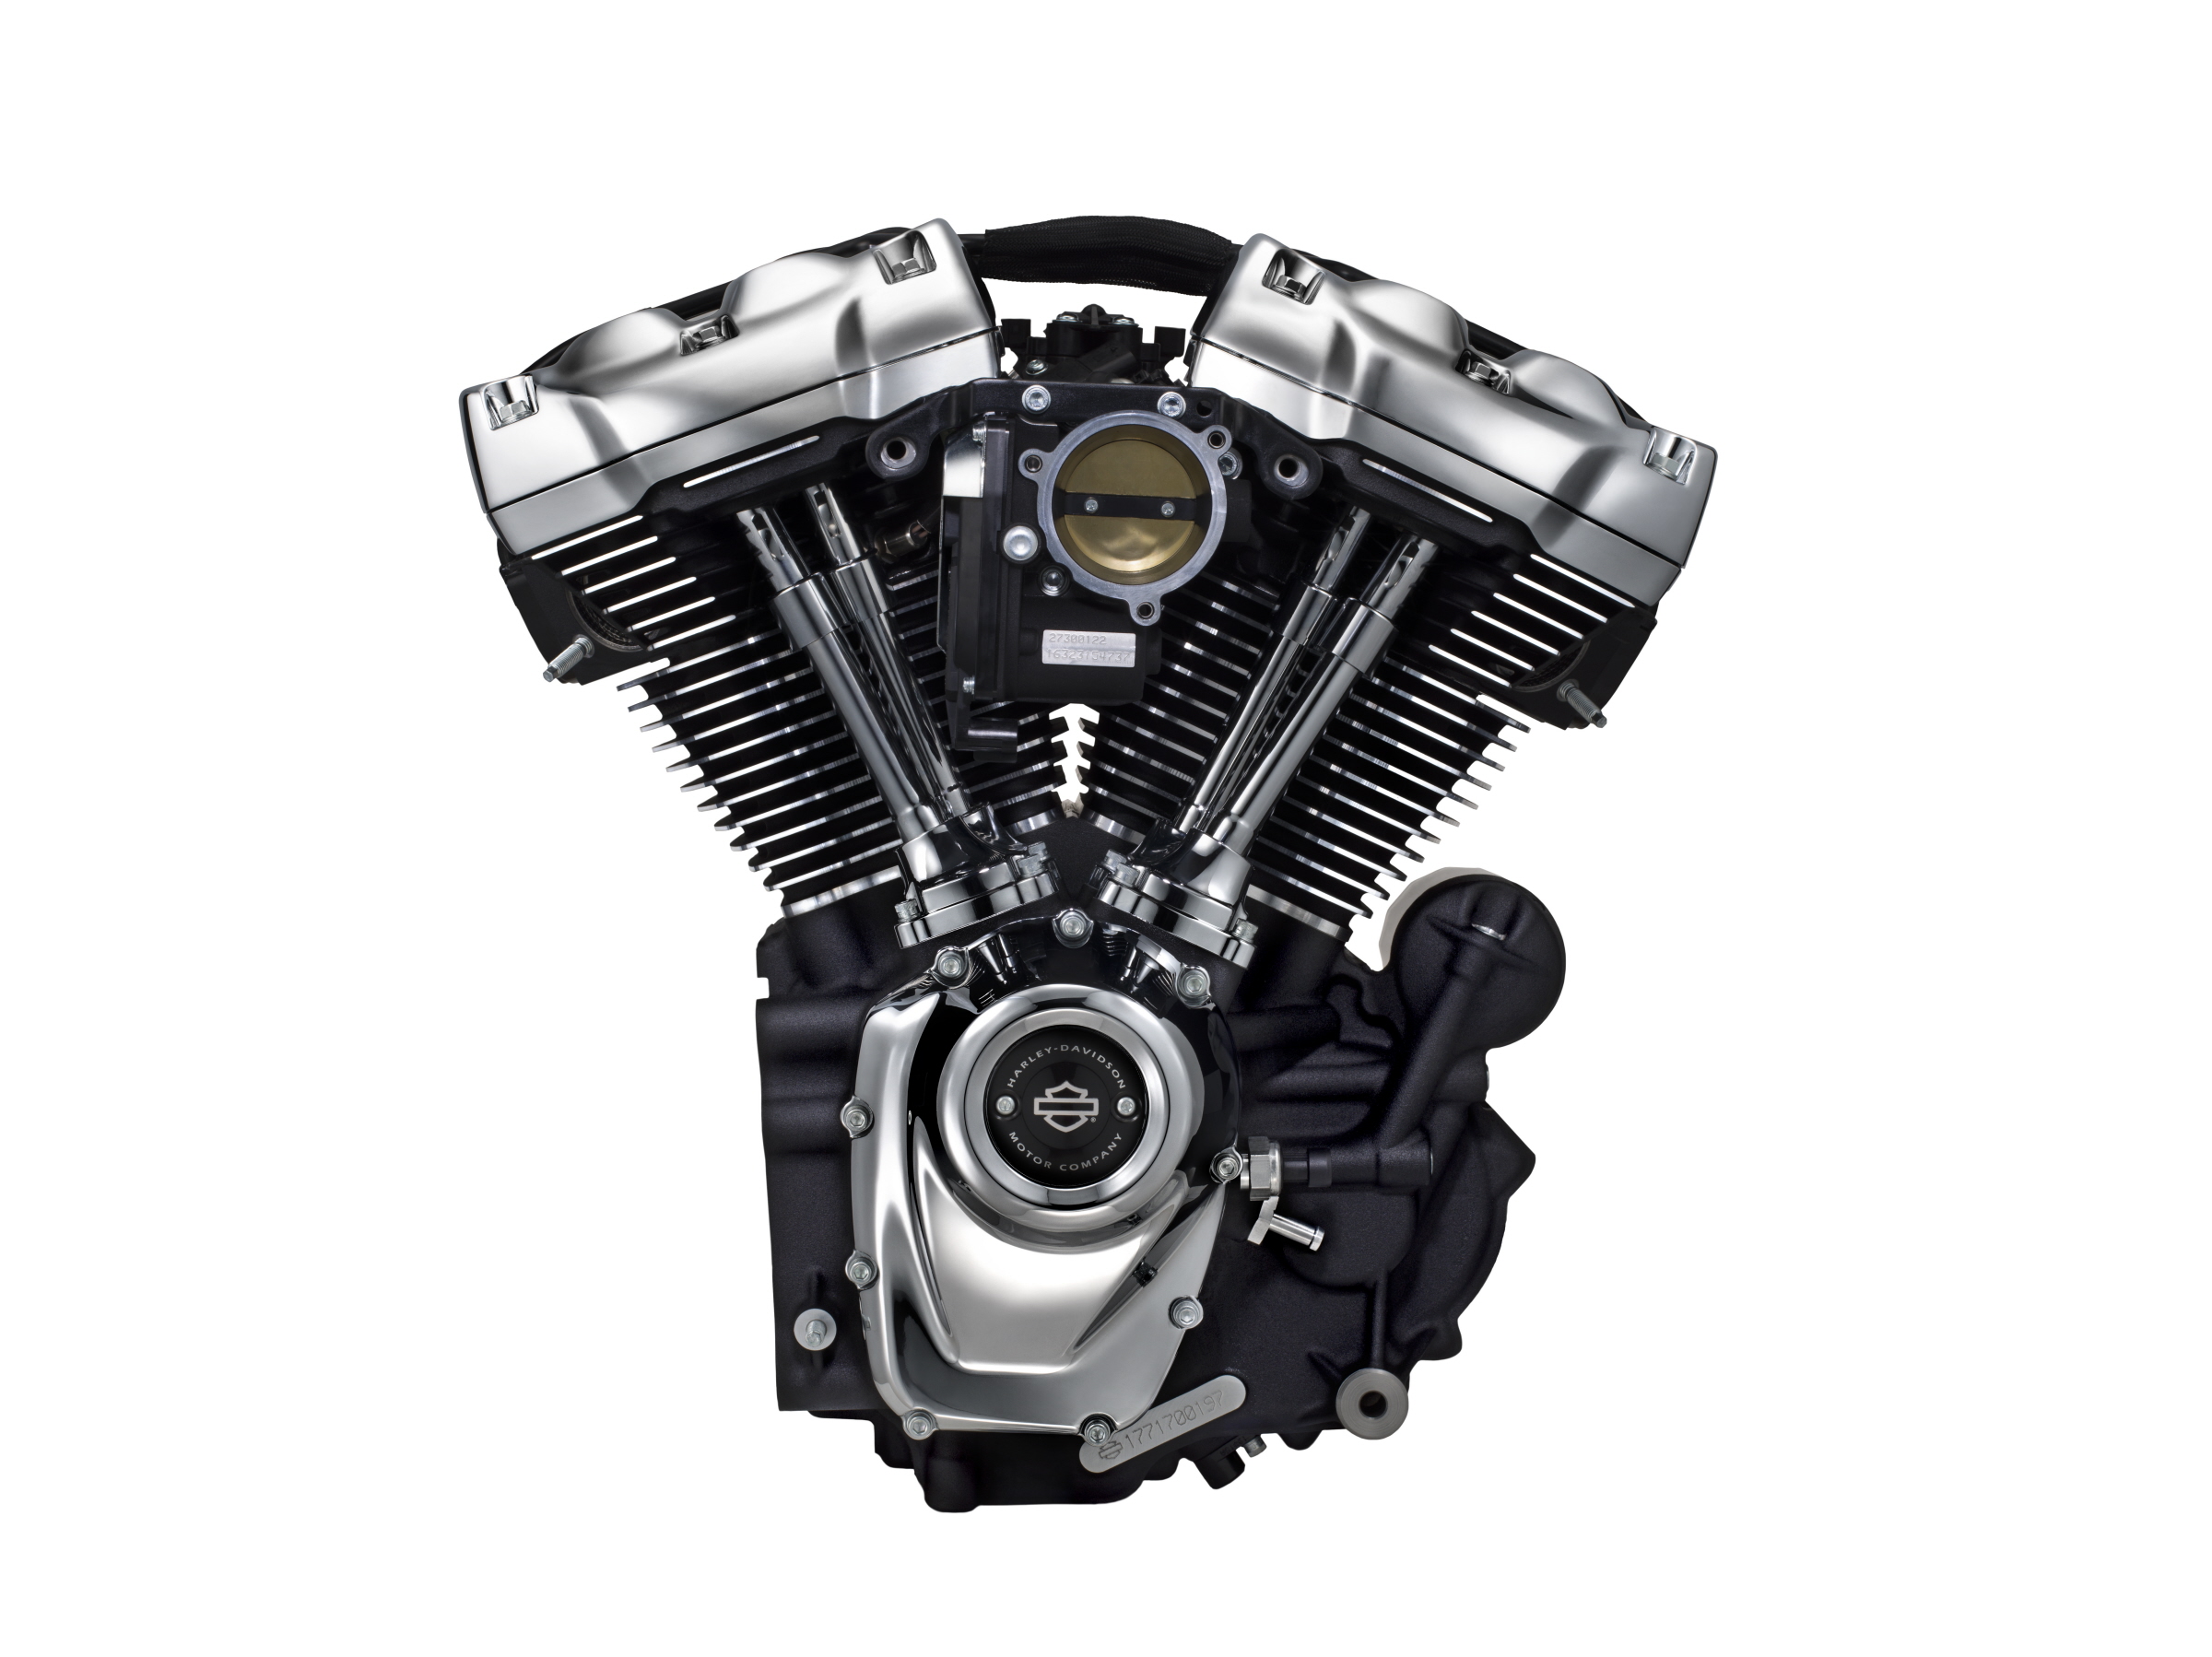 Anstecker HD Harley Milwaukee 8 107 Motor Engine Art 1271 Harley-Davidson 